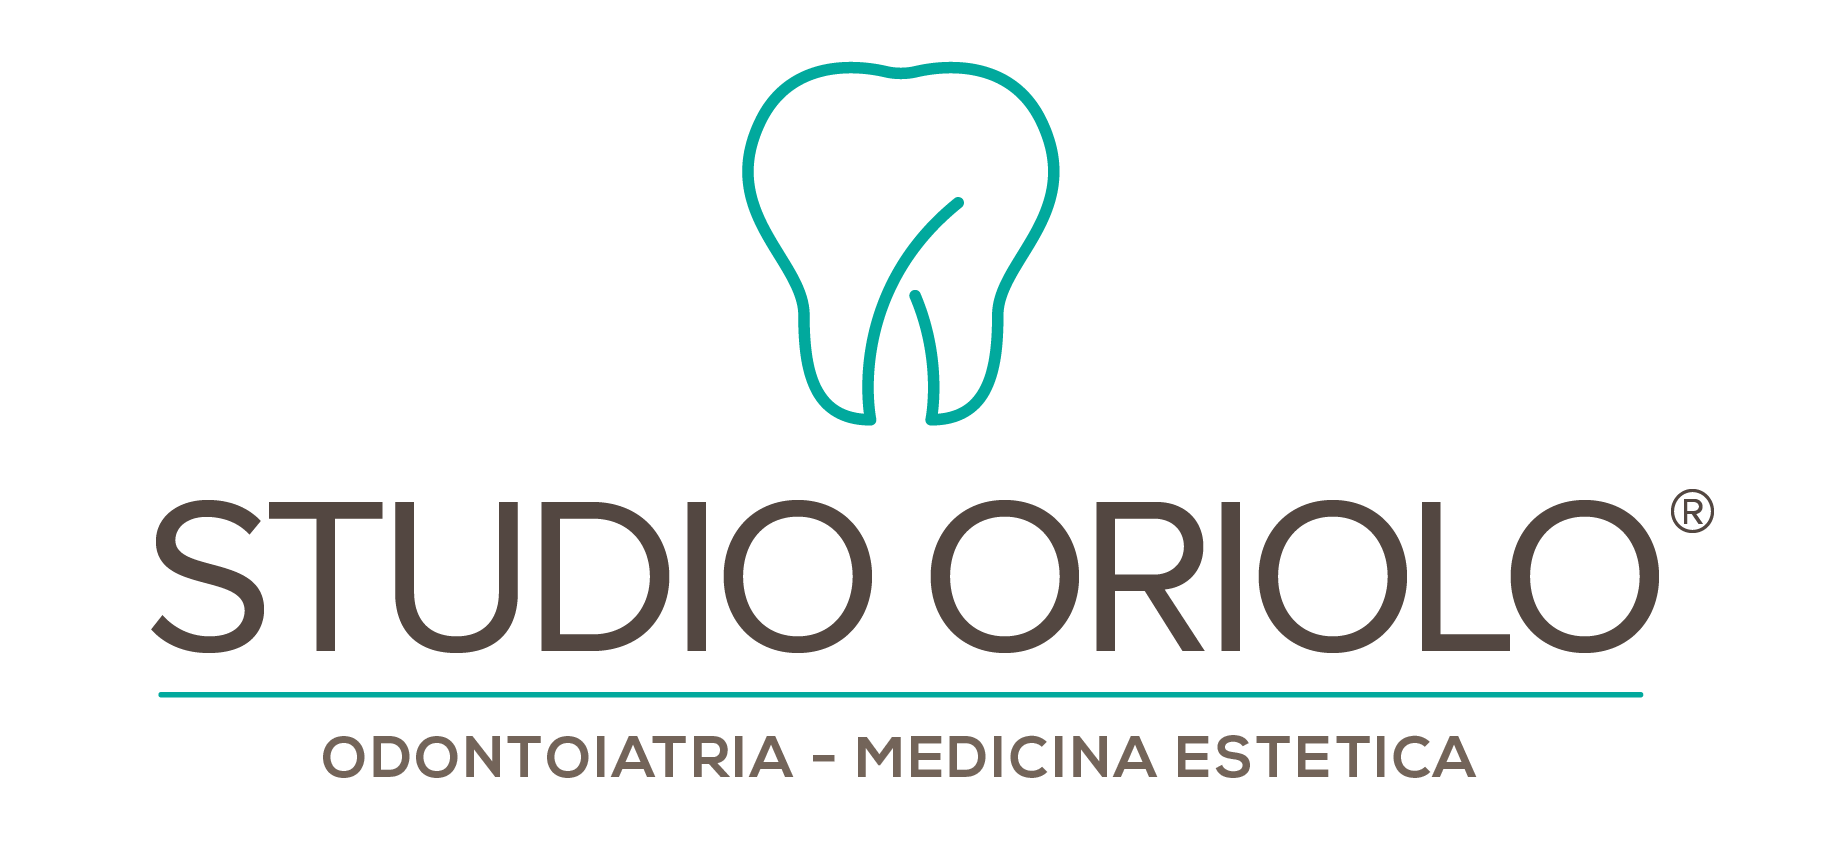 Studio Dentistico Oriolo | Ostia Lido | Logo